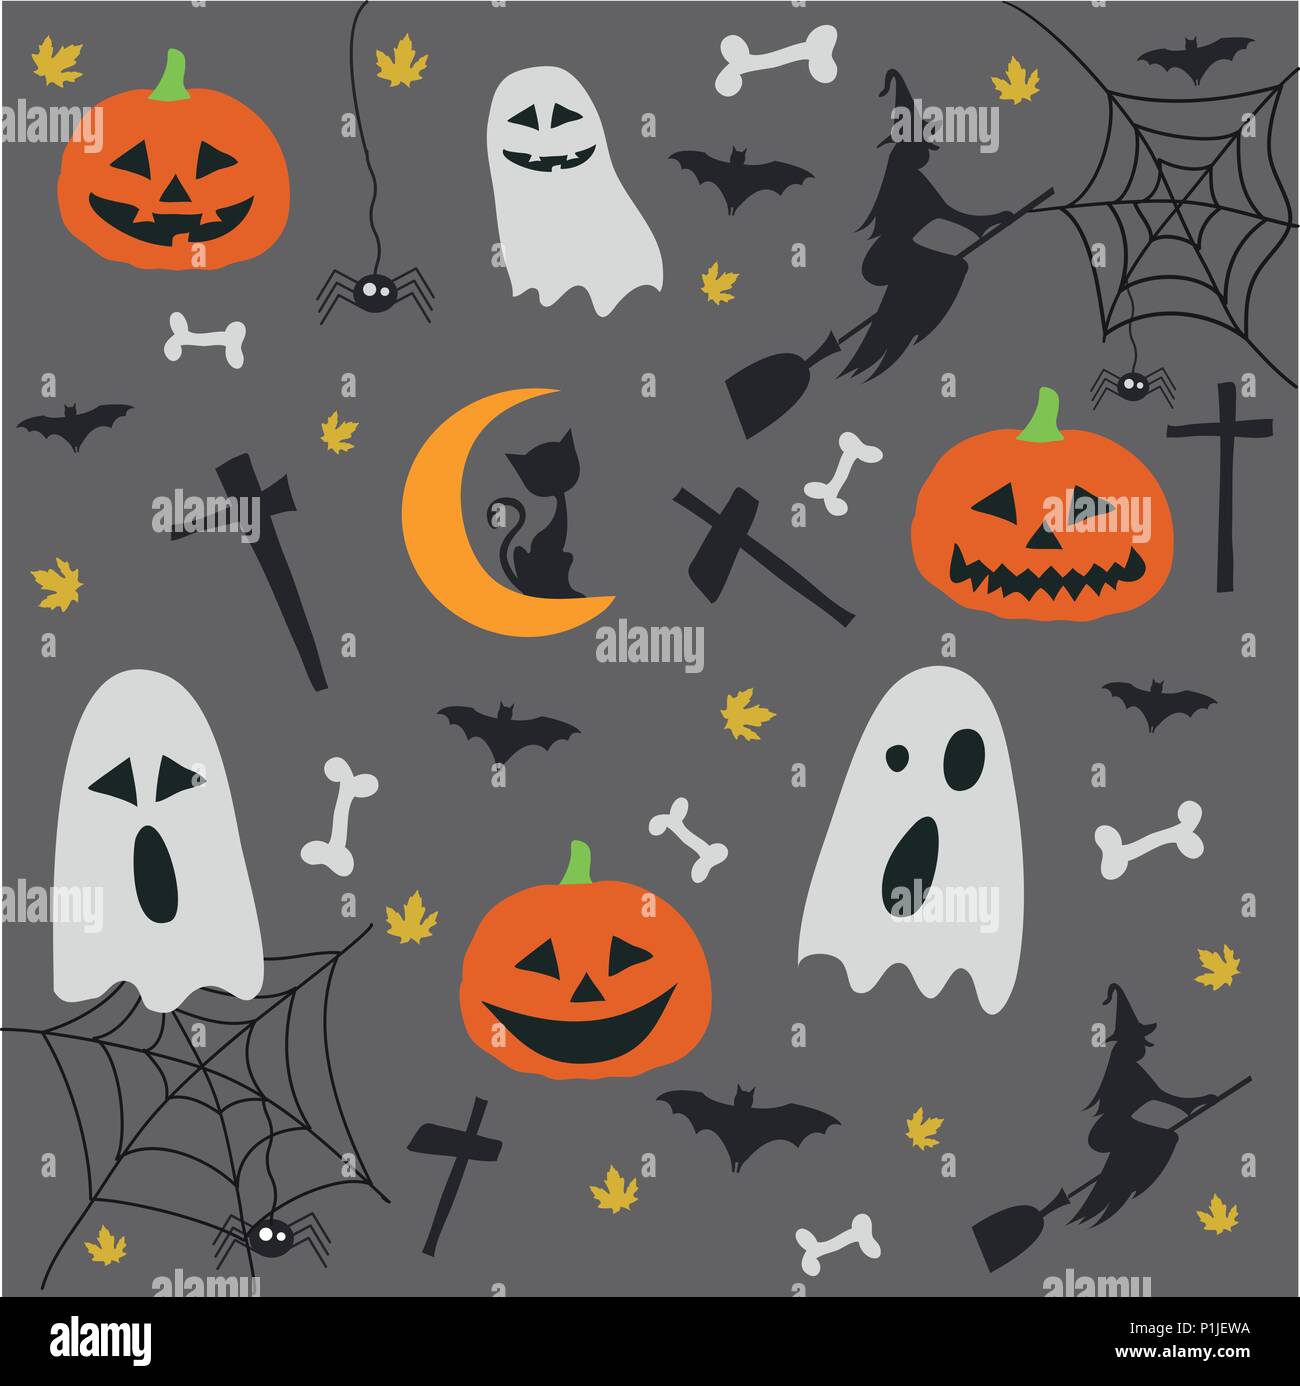 27 Cute Halloween Wallpaper Ideas  Happy Halloween Wallpaper  Idea  Wallpapers  iPhone WallpapersColor Schemes